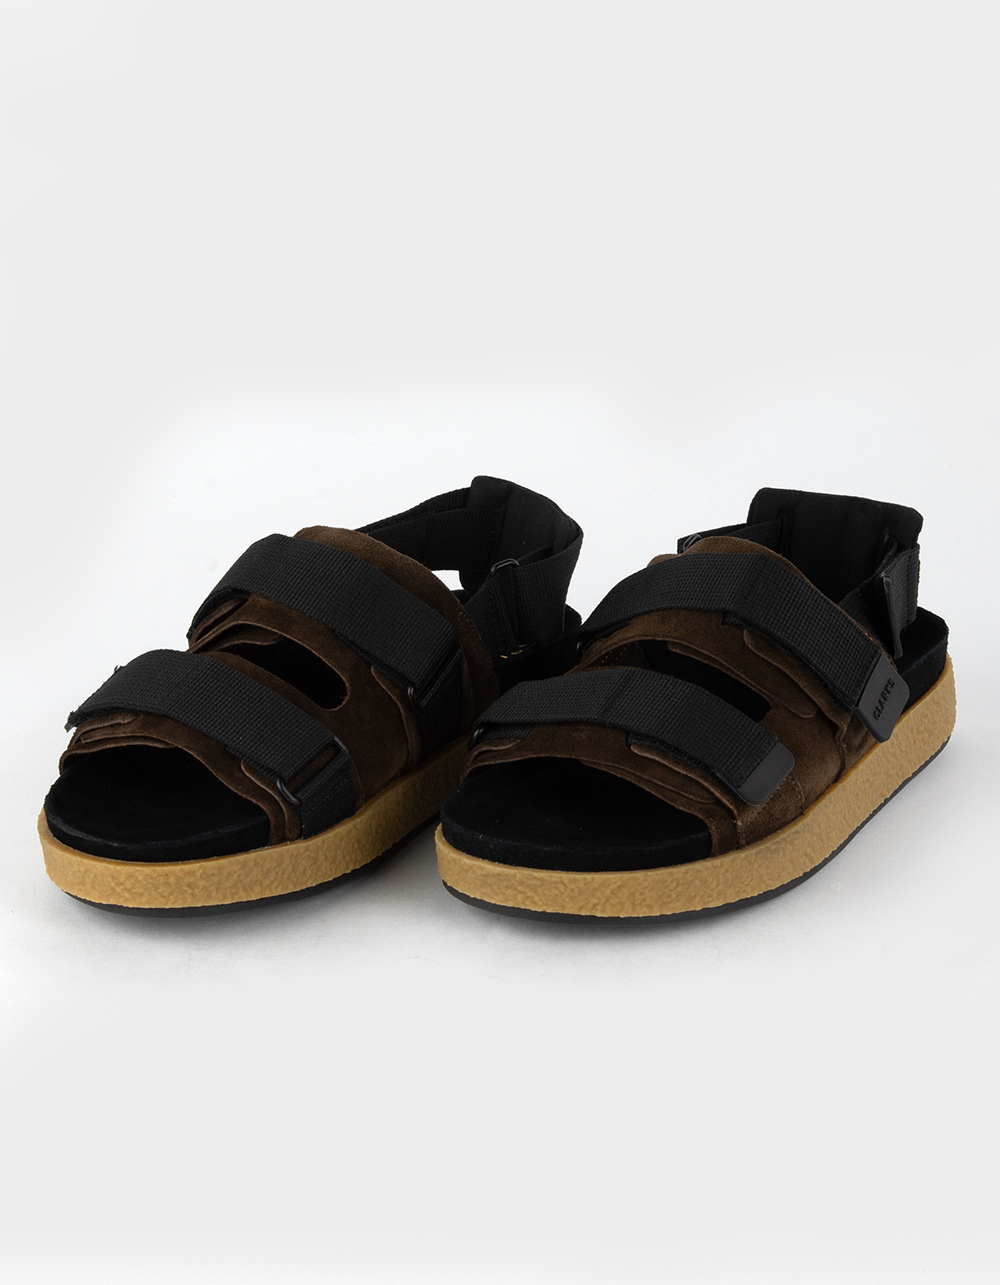 CLARKS Overleigh Tor Mens Sandals - OLIVE COMBO | Tillys